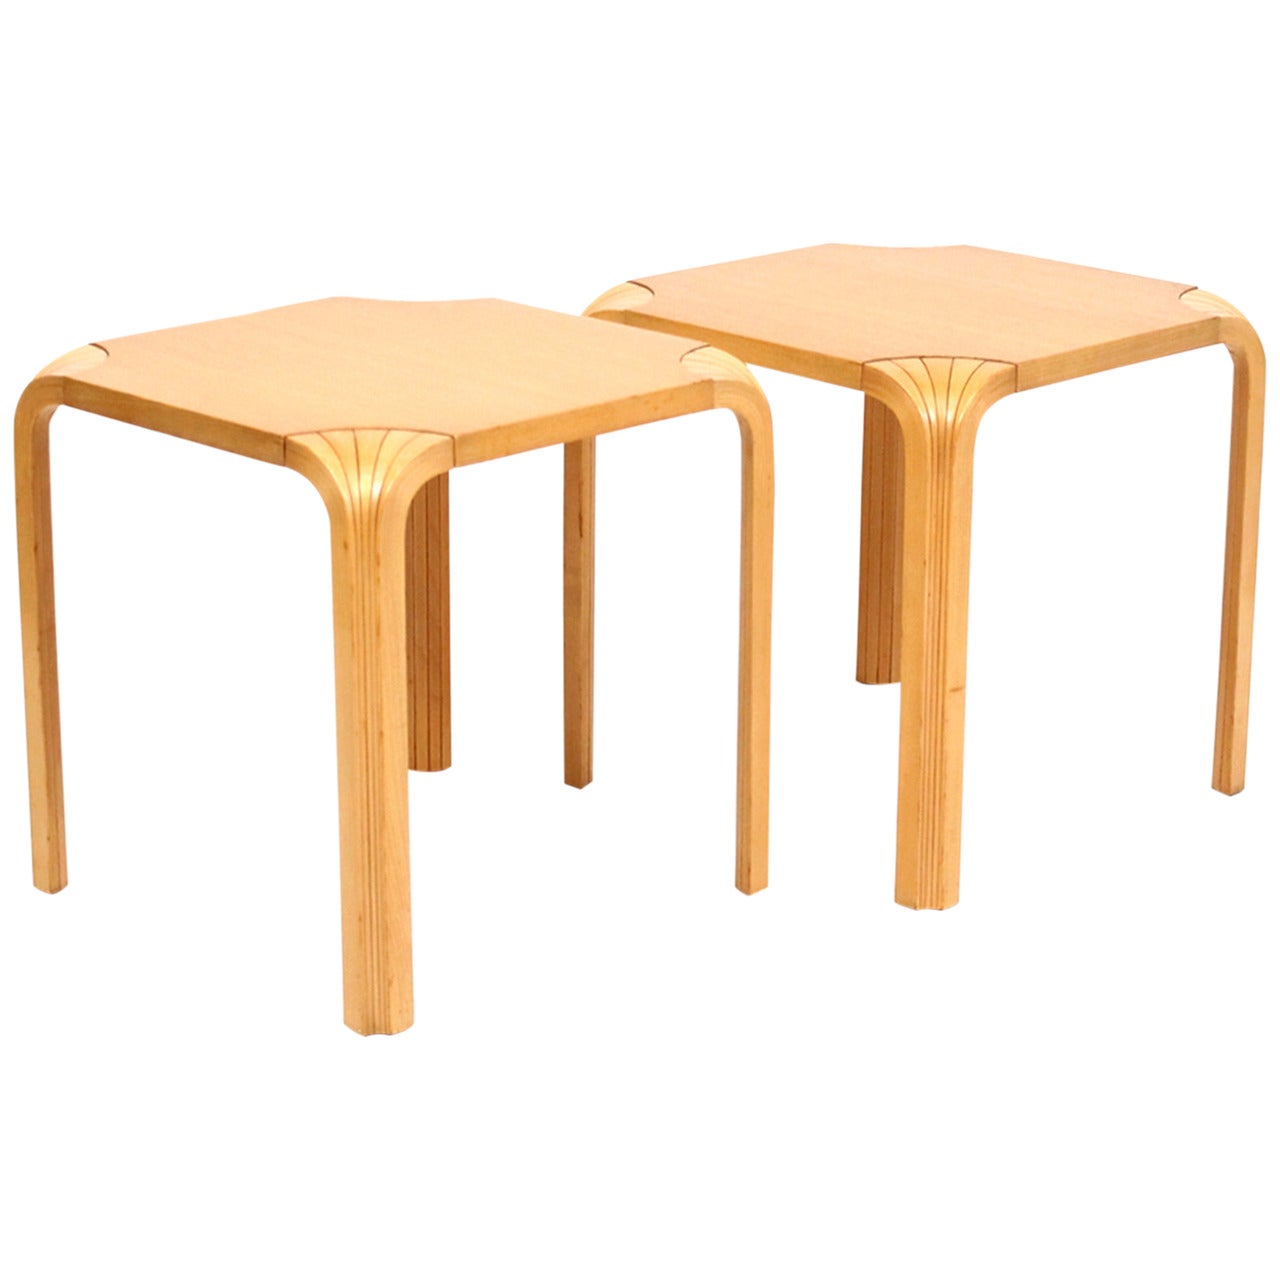 Alvar Aalto for Artek "Fan Leg" Side Tables